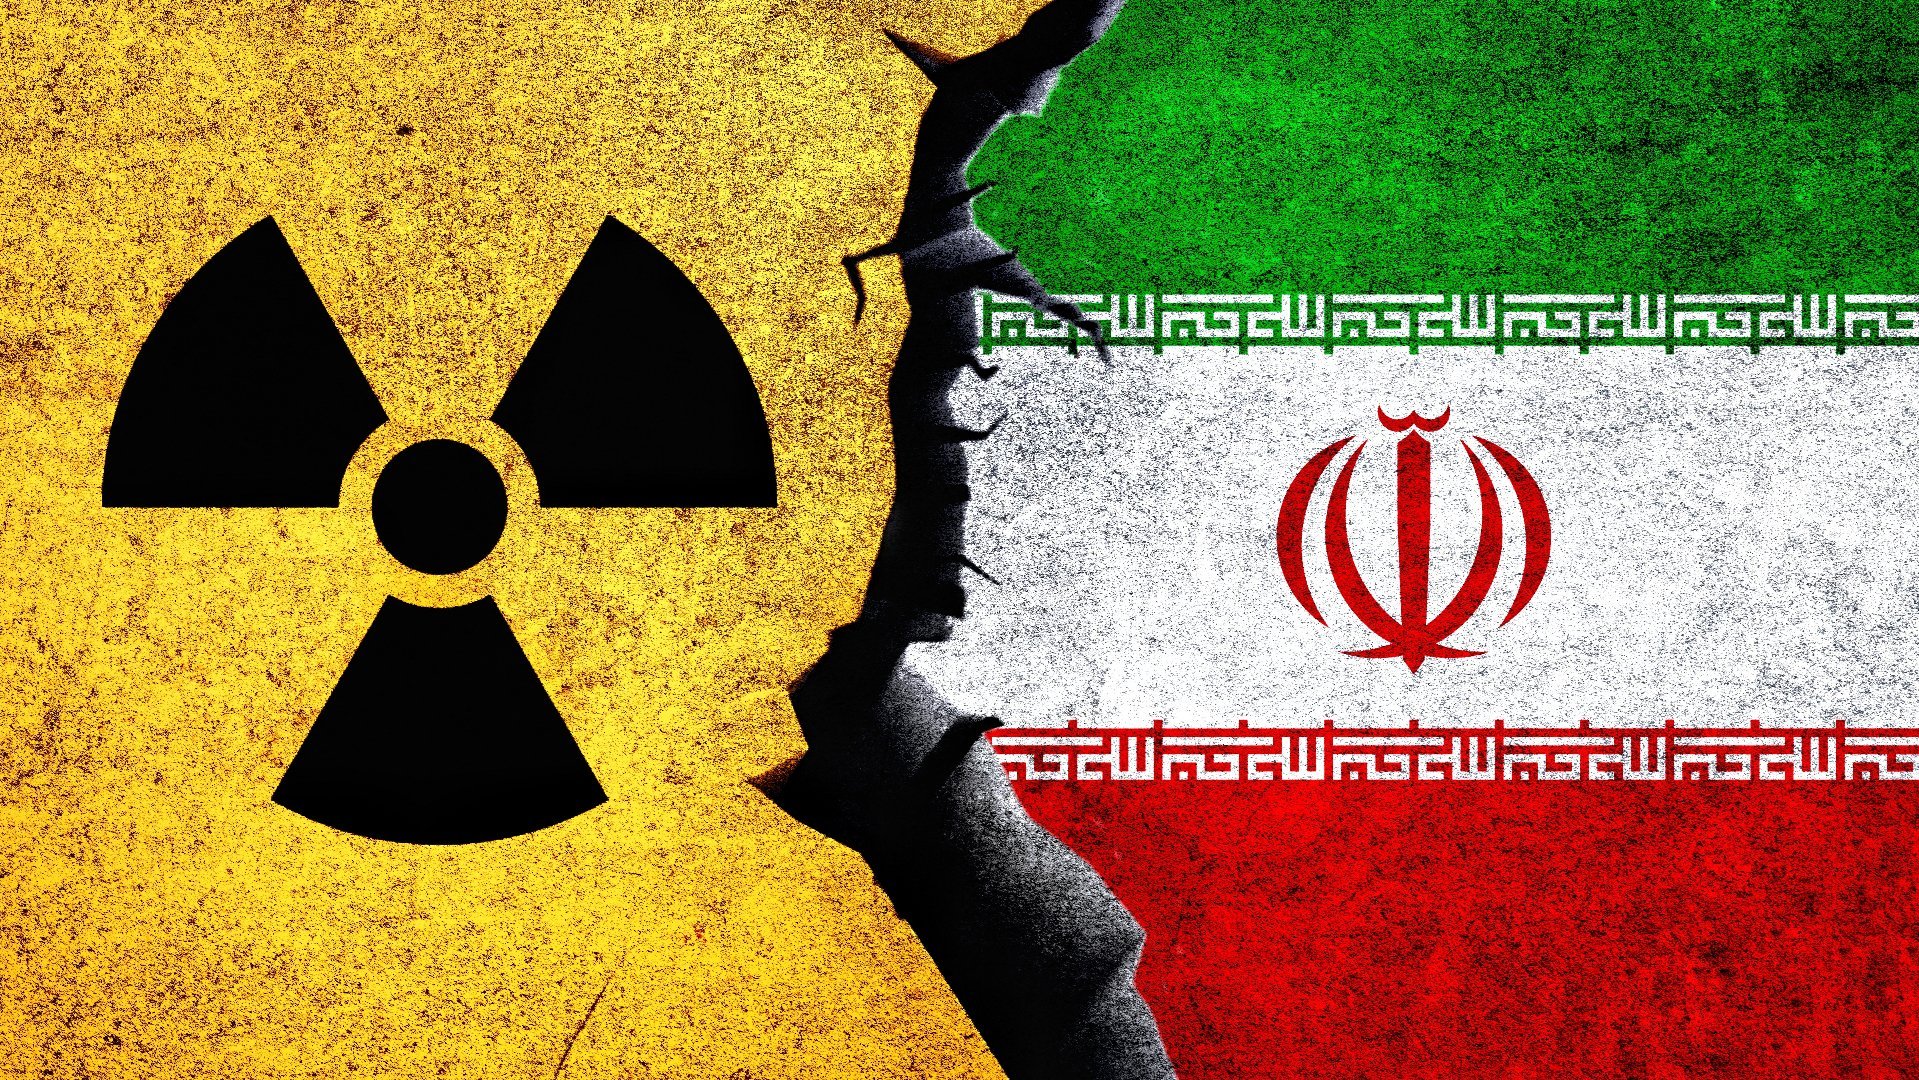 Iran takes responsible steps regarding its nuclear program - spokesperson